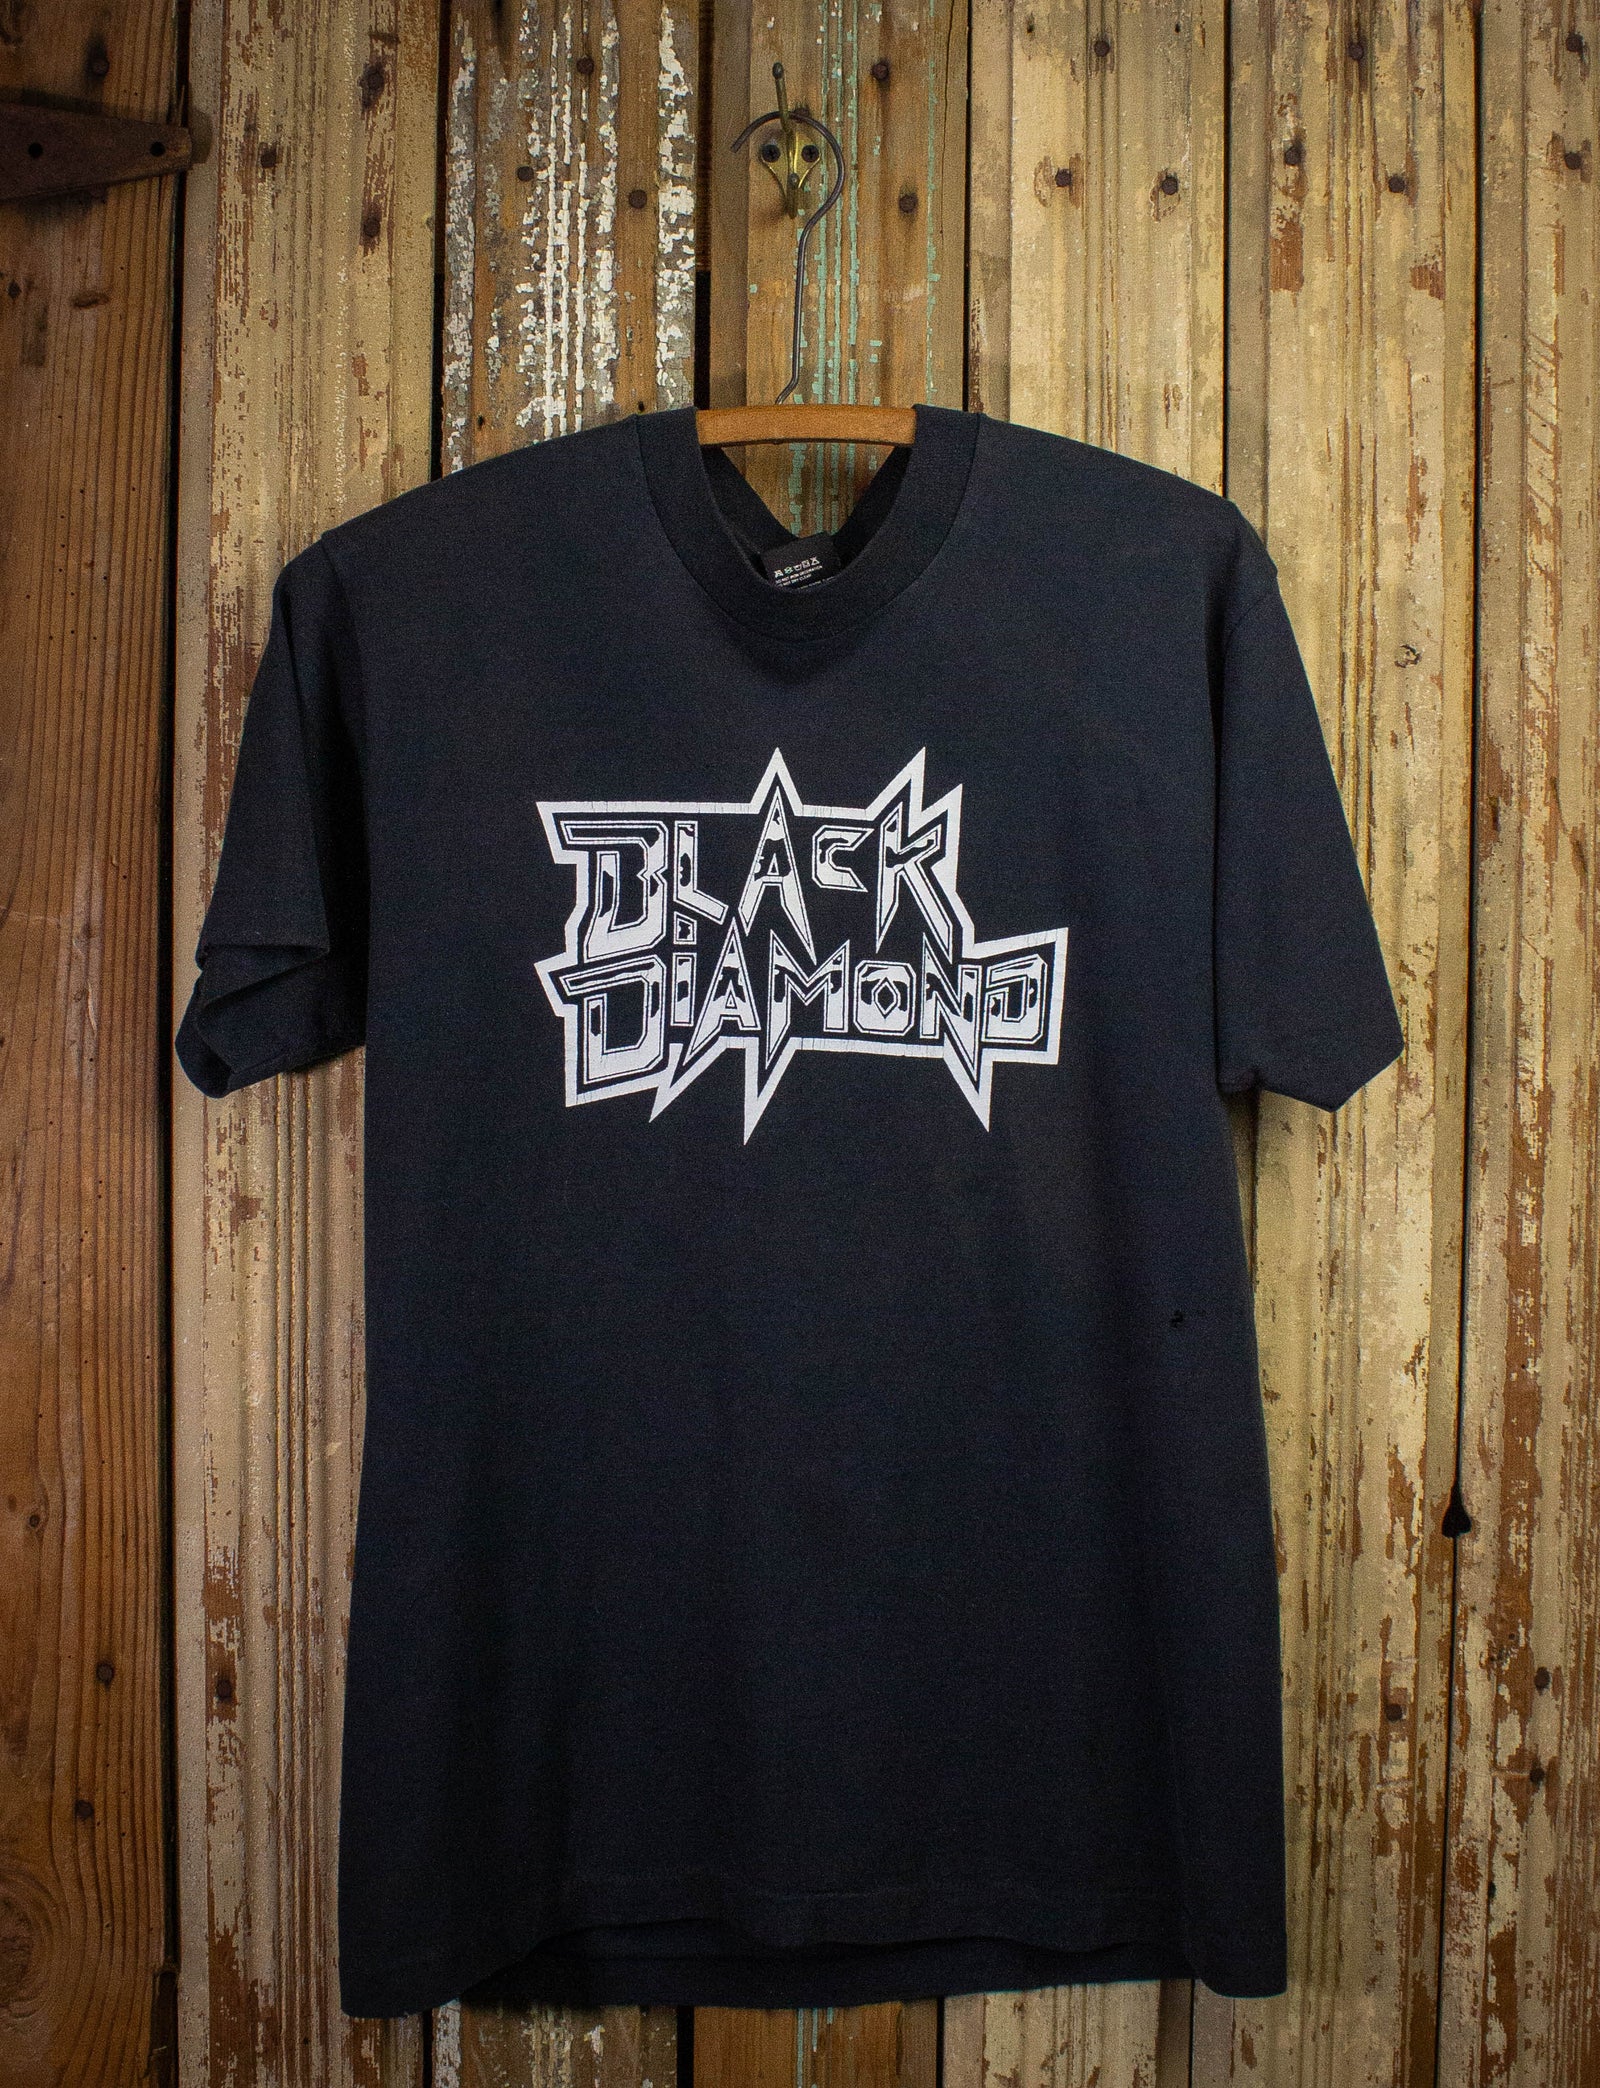 Vintage Black Diamond Concert T Shirt 90s Black Large